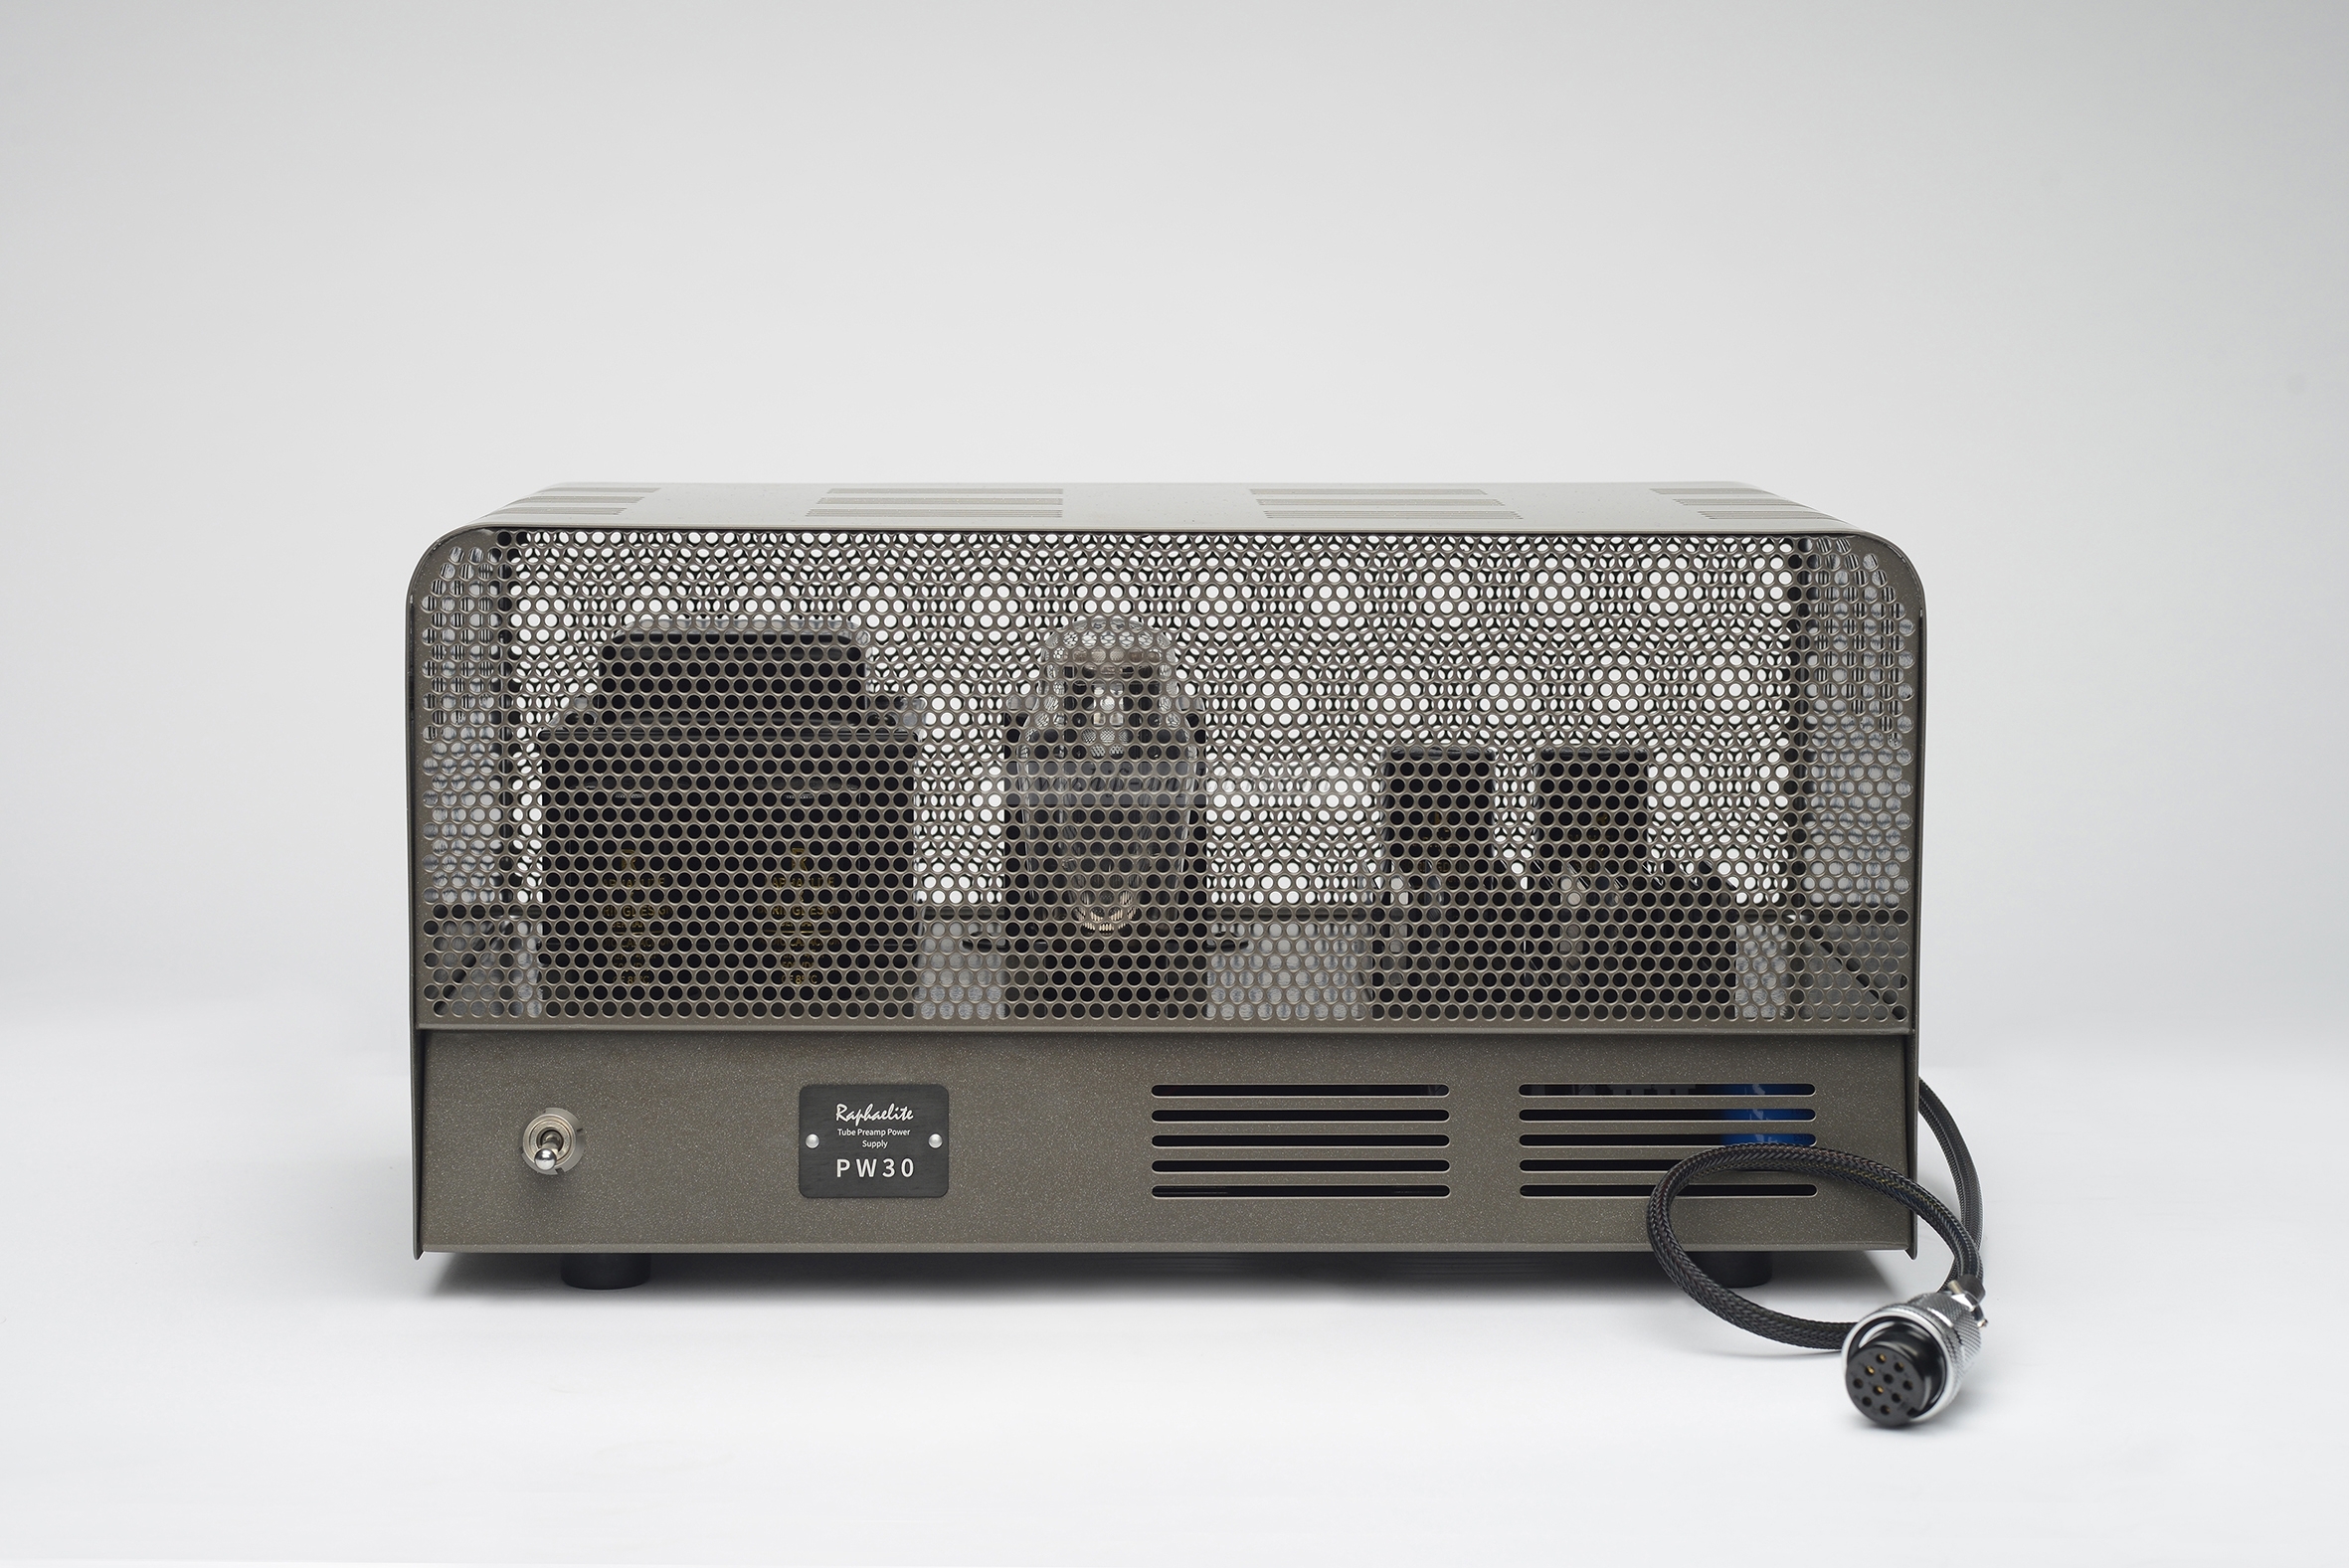 Raphaelite CK300 300B tube Class A Single-ended High-Power Headphone Amplifier & Power section